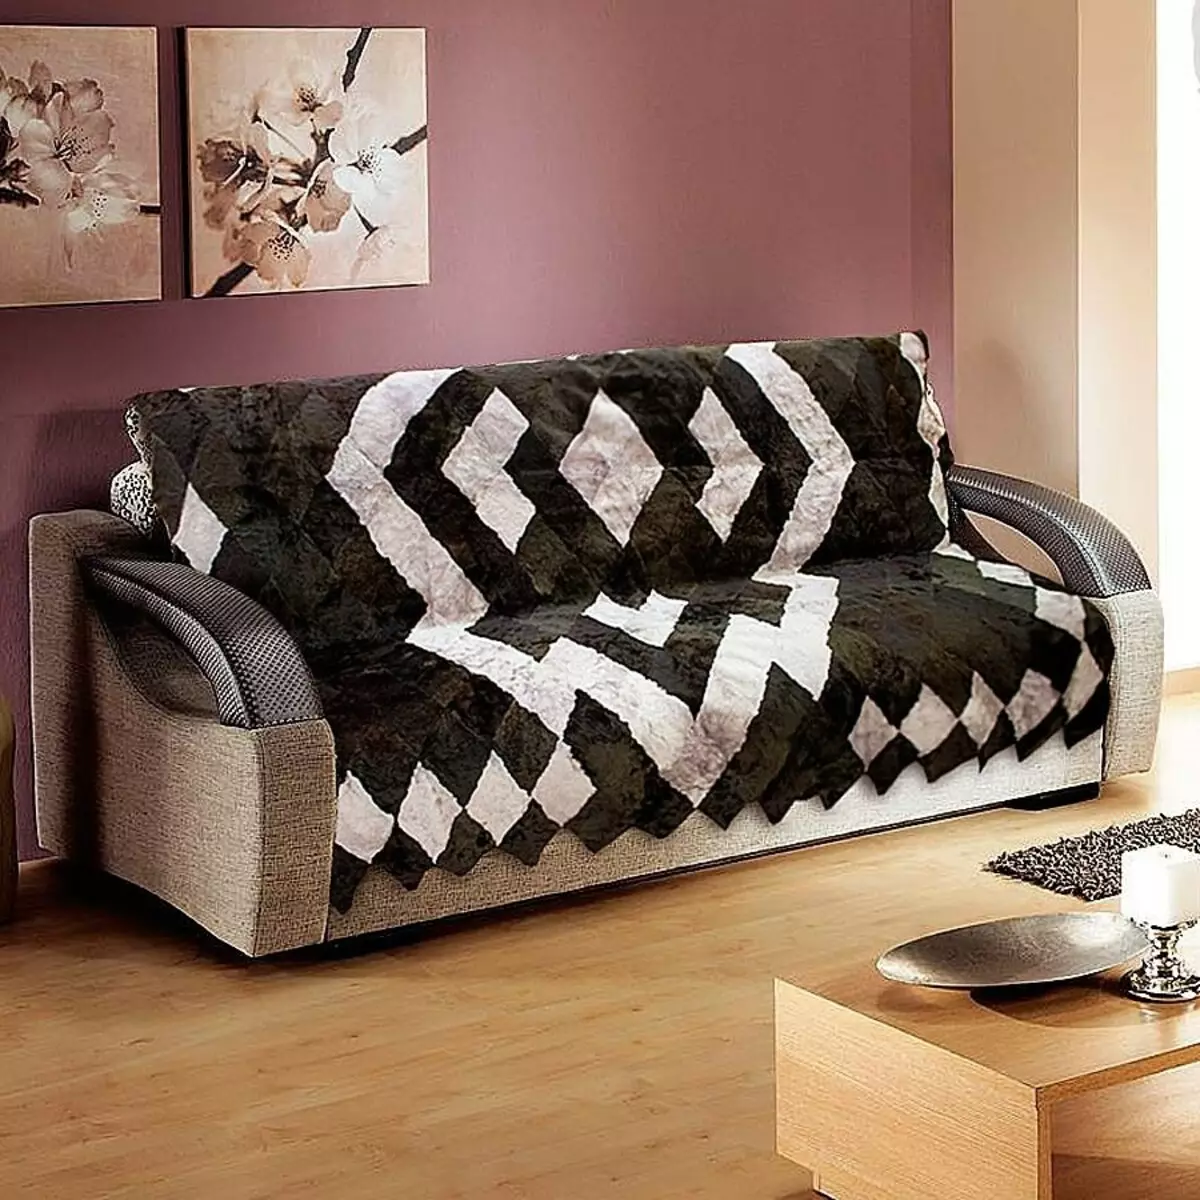 Pokriveni na kauč (84 fotografije): pregled tapiserija i pletenih kaidu, odabir skupova za kauč i fotelje, tepih, krzno i ​​druge opcije 9062_12